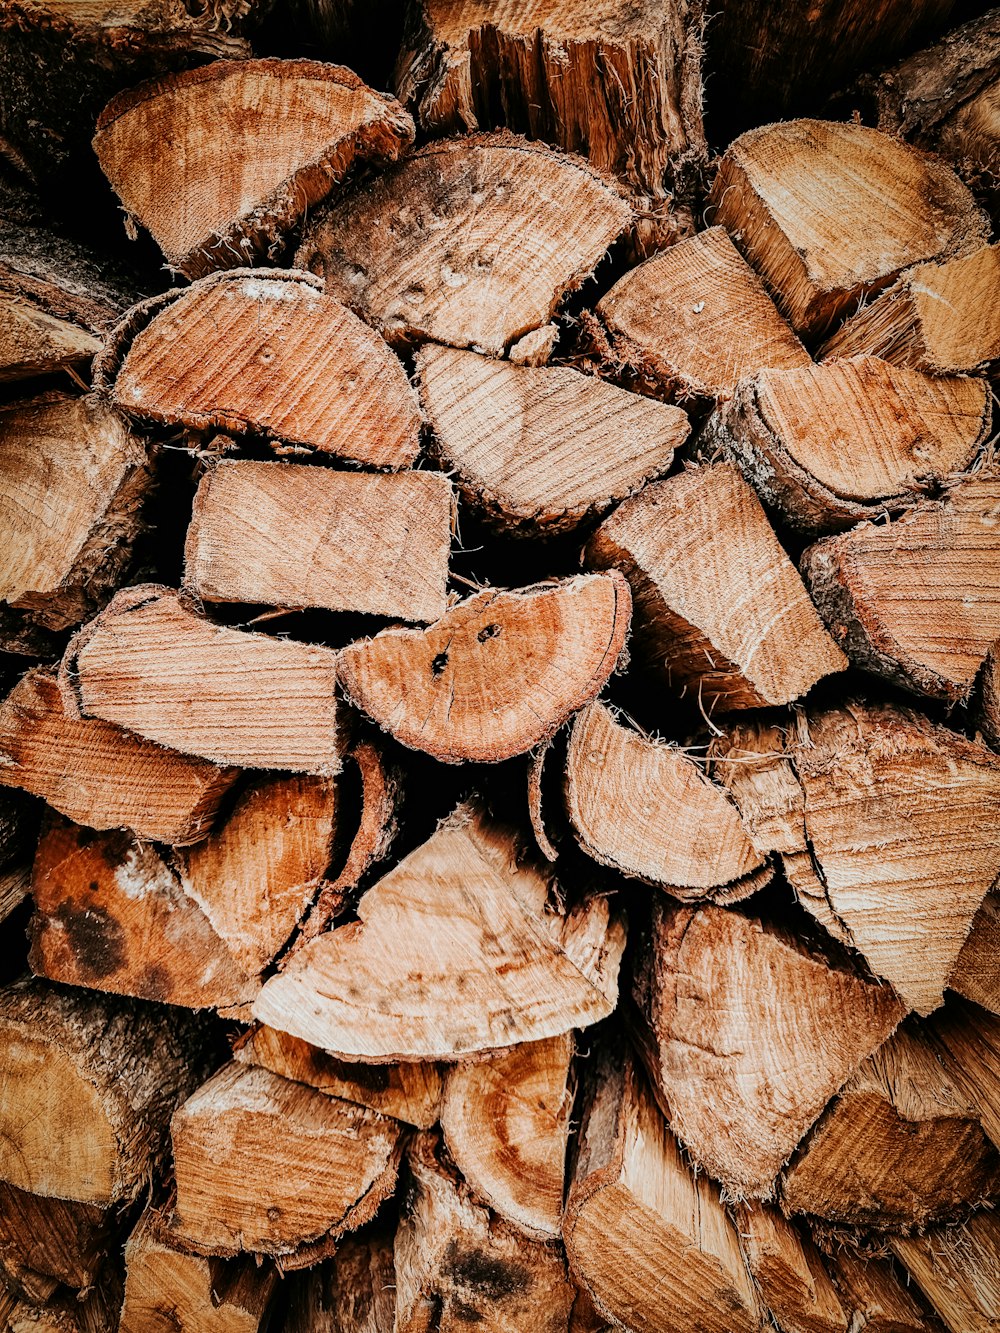 Una pila de madera cortada sobre una pila de troncos